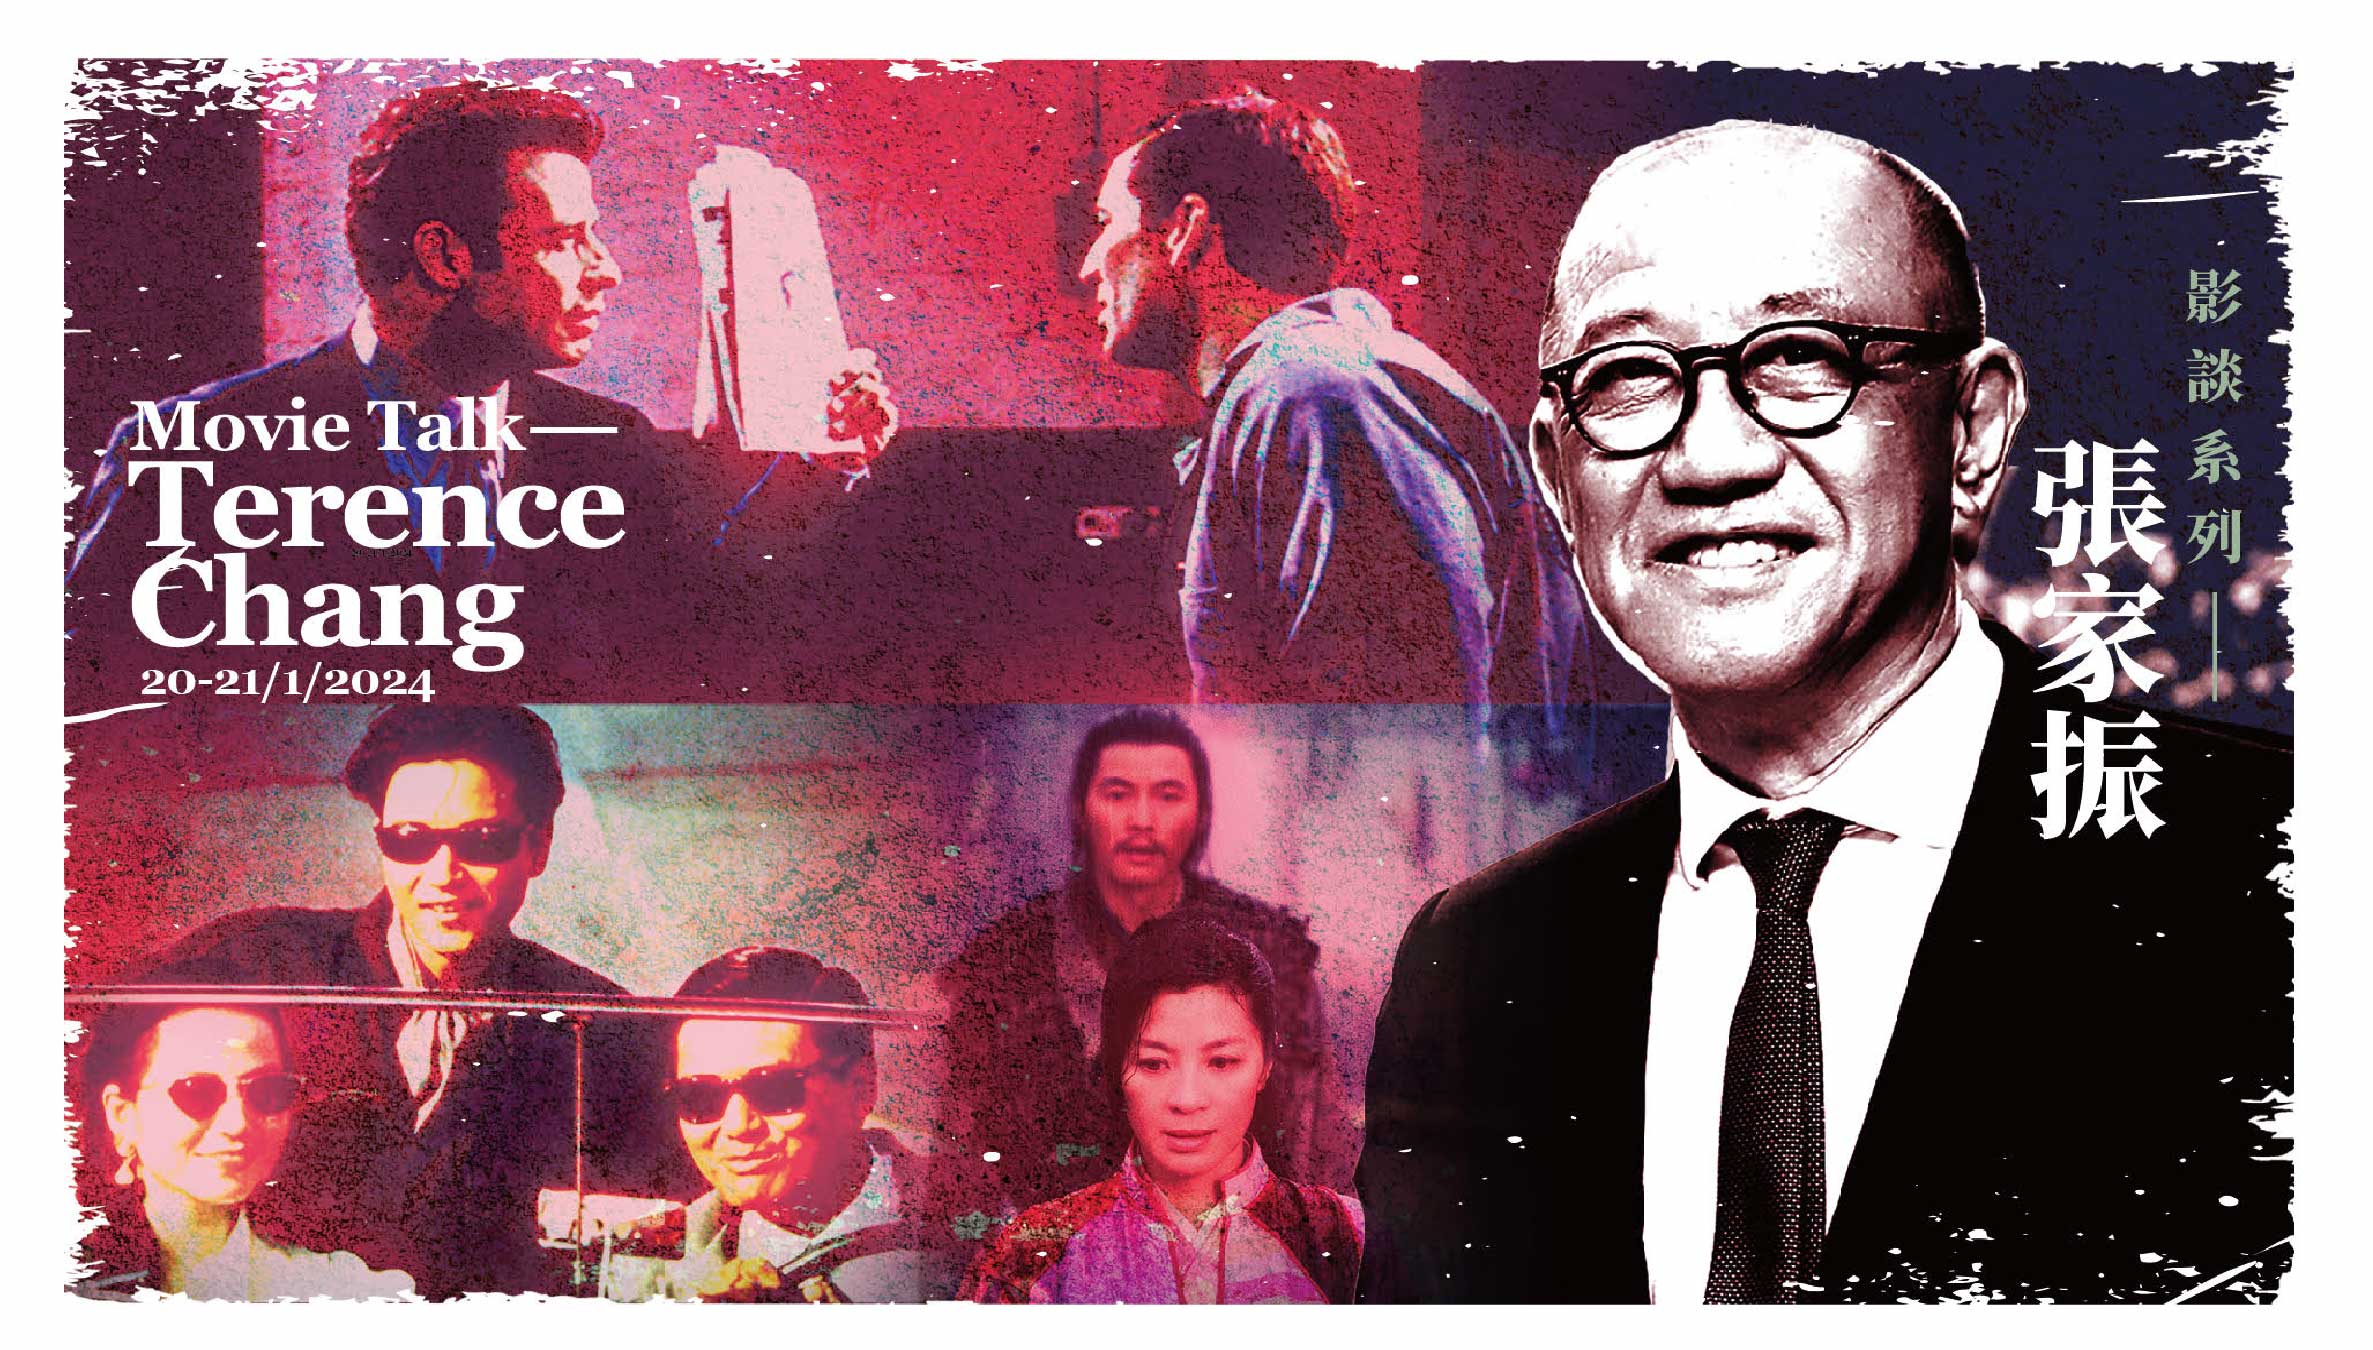 Movie Talk — Terence Chang (Screening) (20/1/2024-21/1/2024)